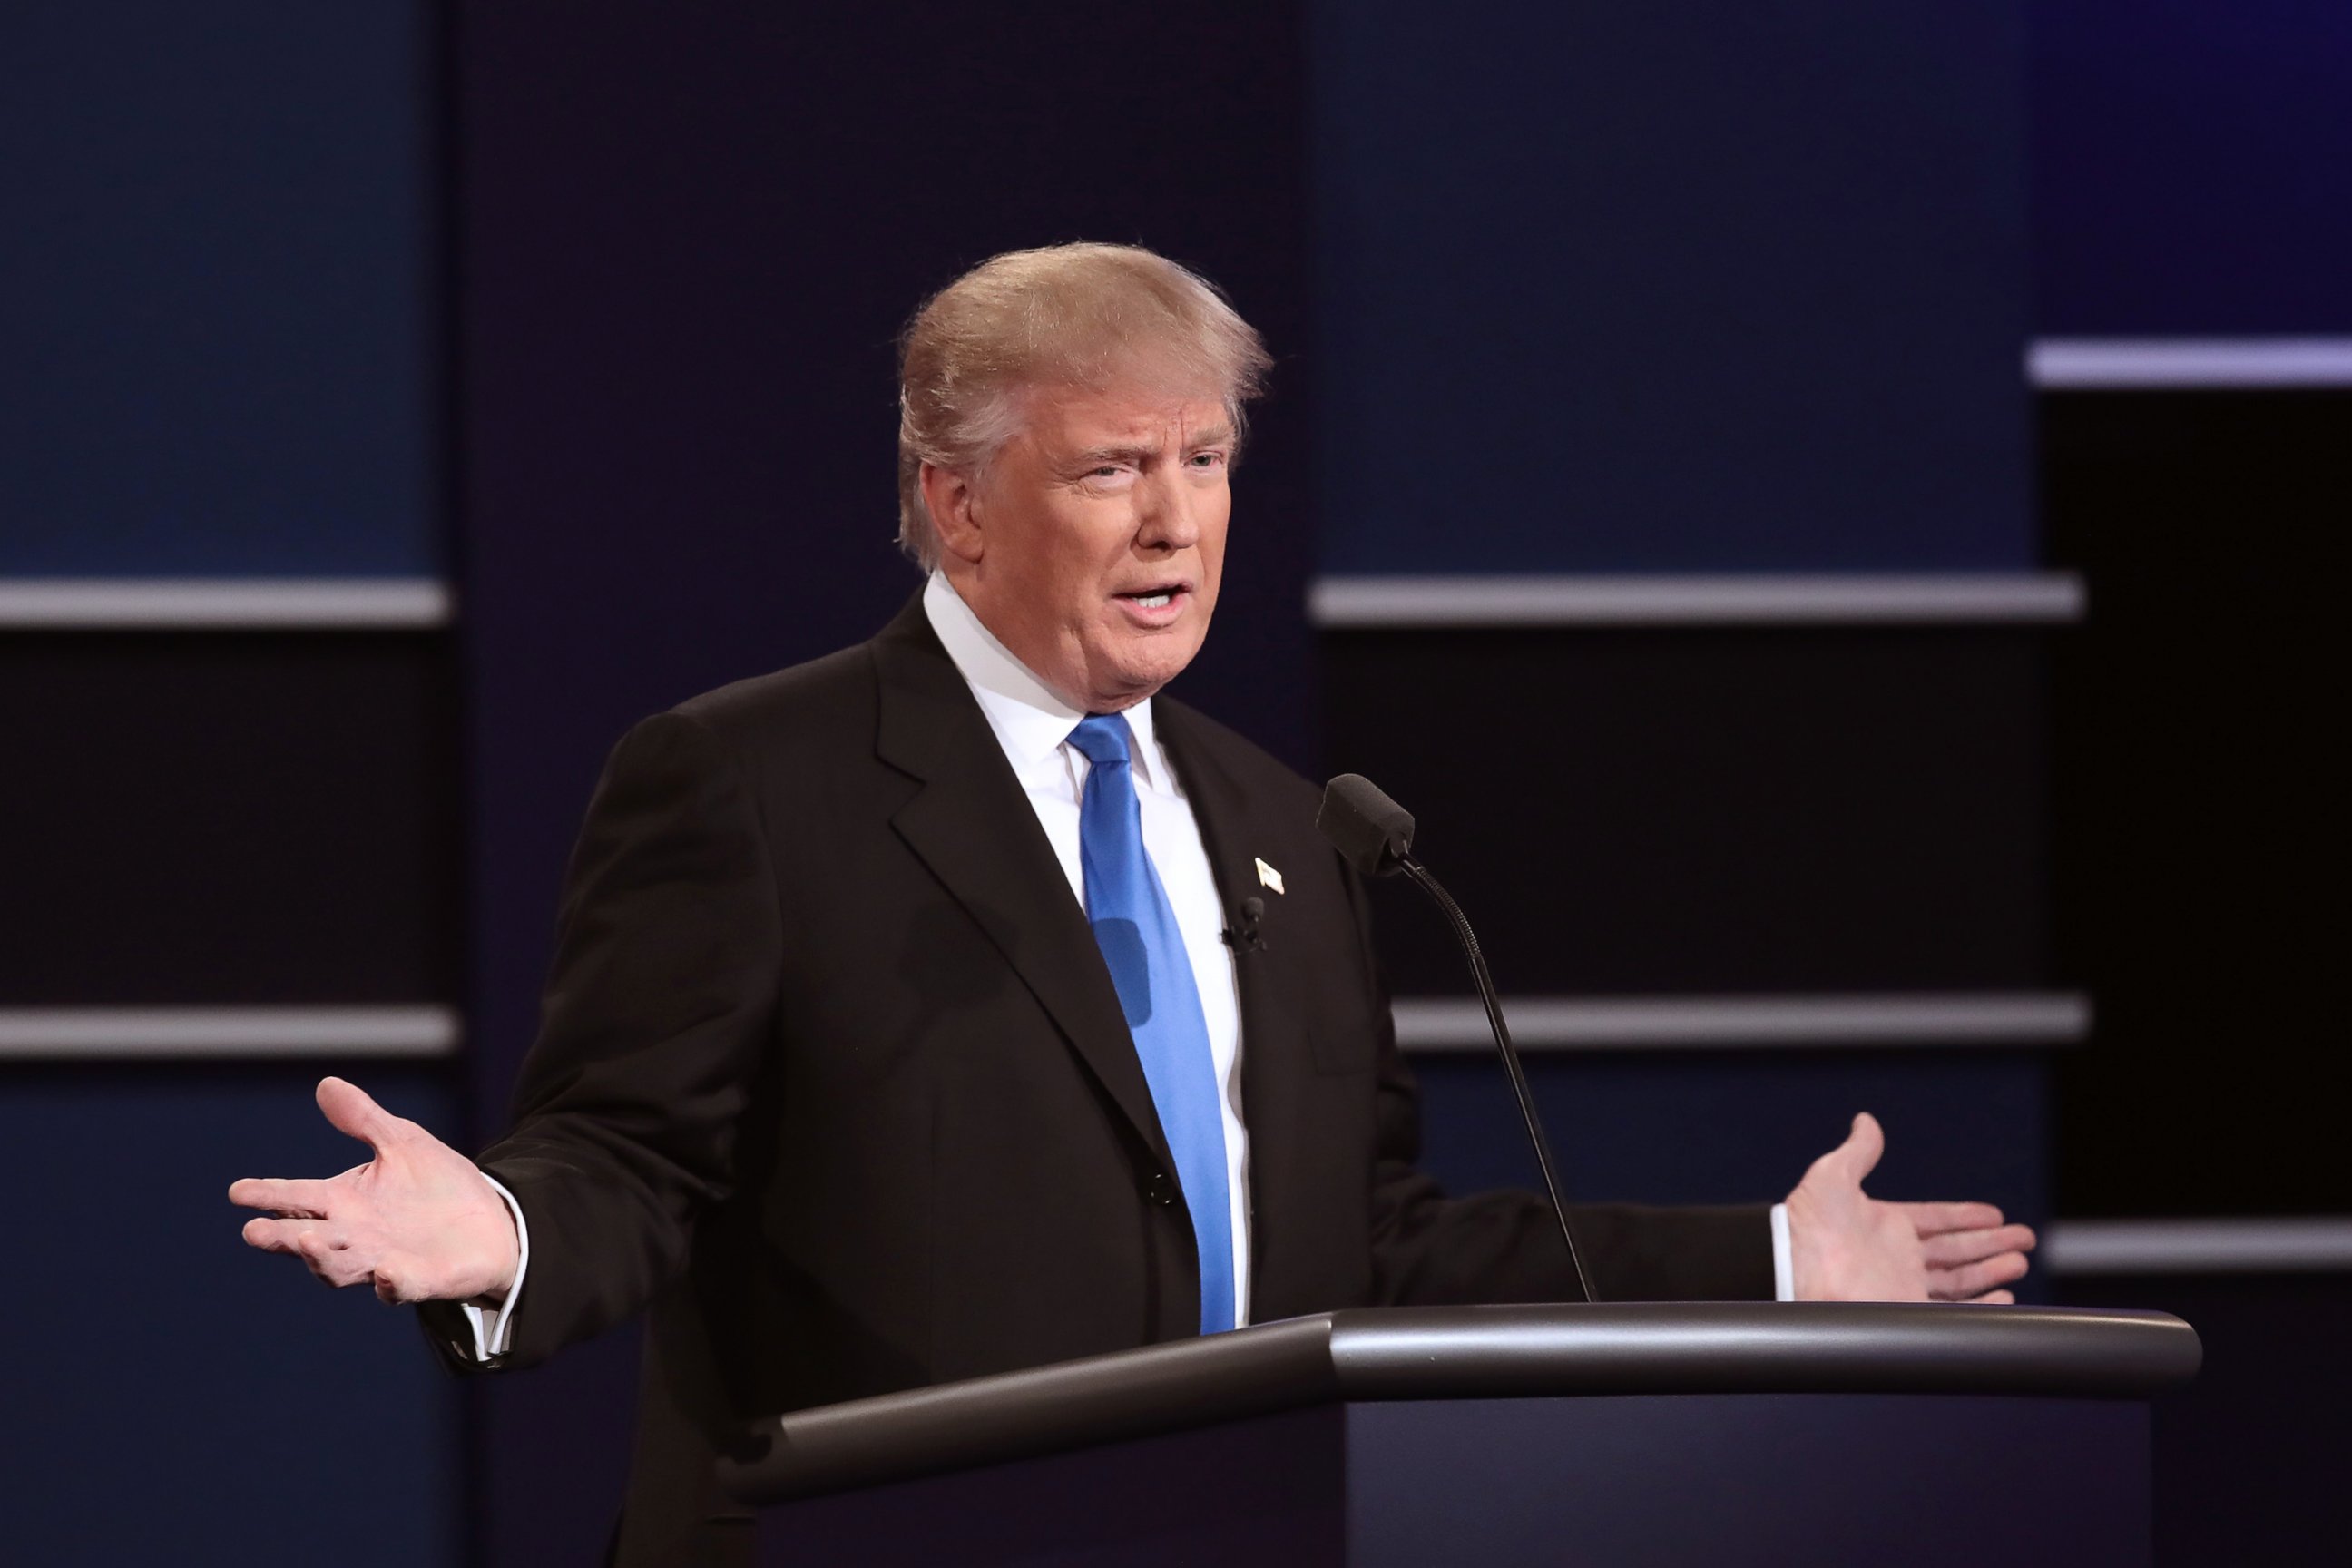 PHOTO: Republican presidential nominee Donald Trump speaks during the Presidential Debate at Hofstra University on Sept. 26, 2016 in Hempstead, New York. 